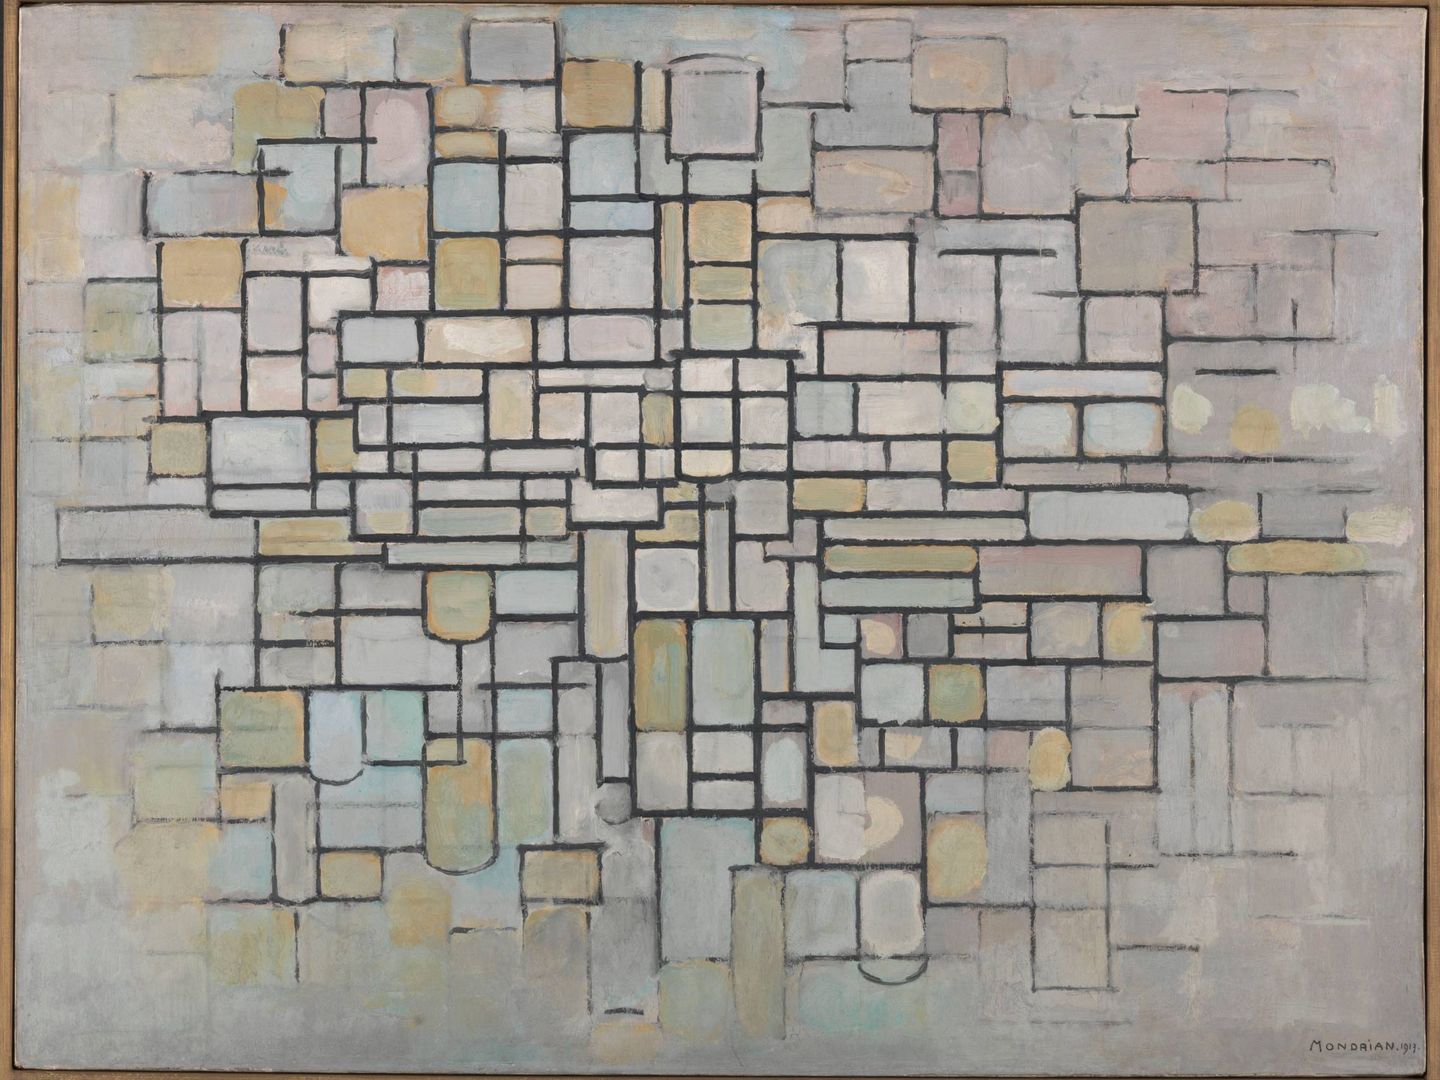 'Composición nº II', Piet Mondrian, 1913. Kröller-Müller Museum.